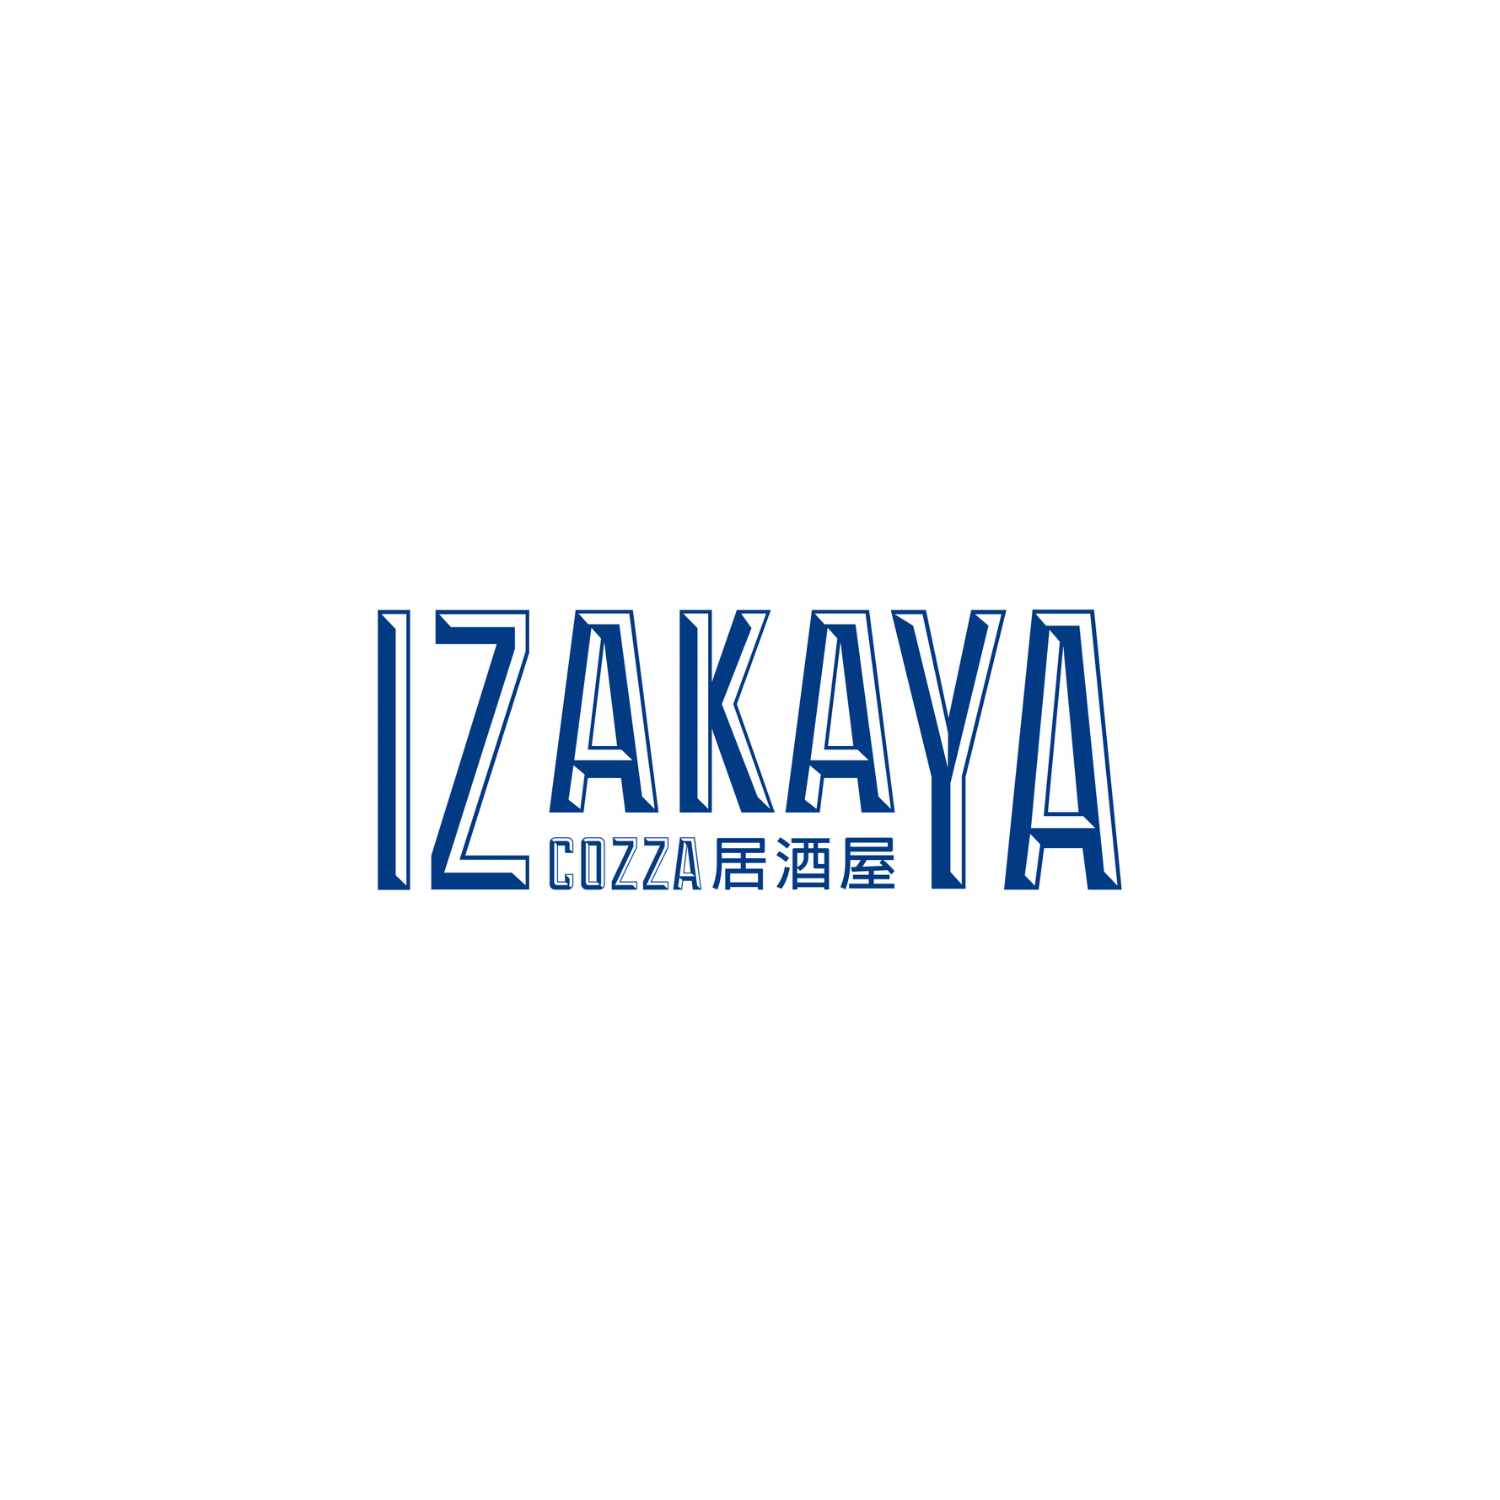 izakaya-cozza-monaco-carlo-app-commercant-restaurant